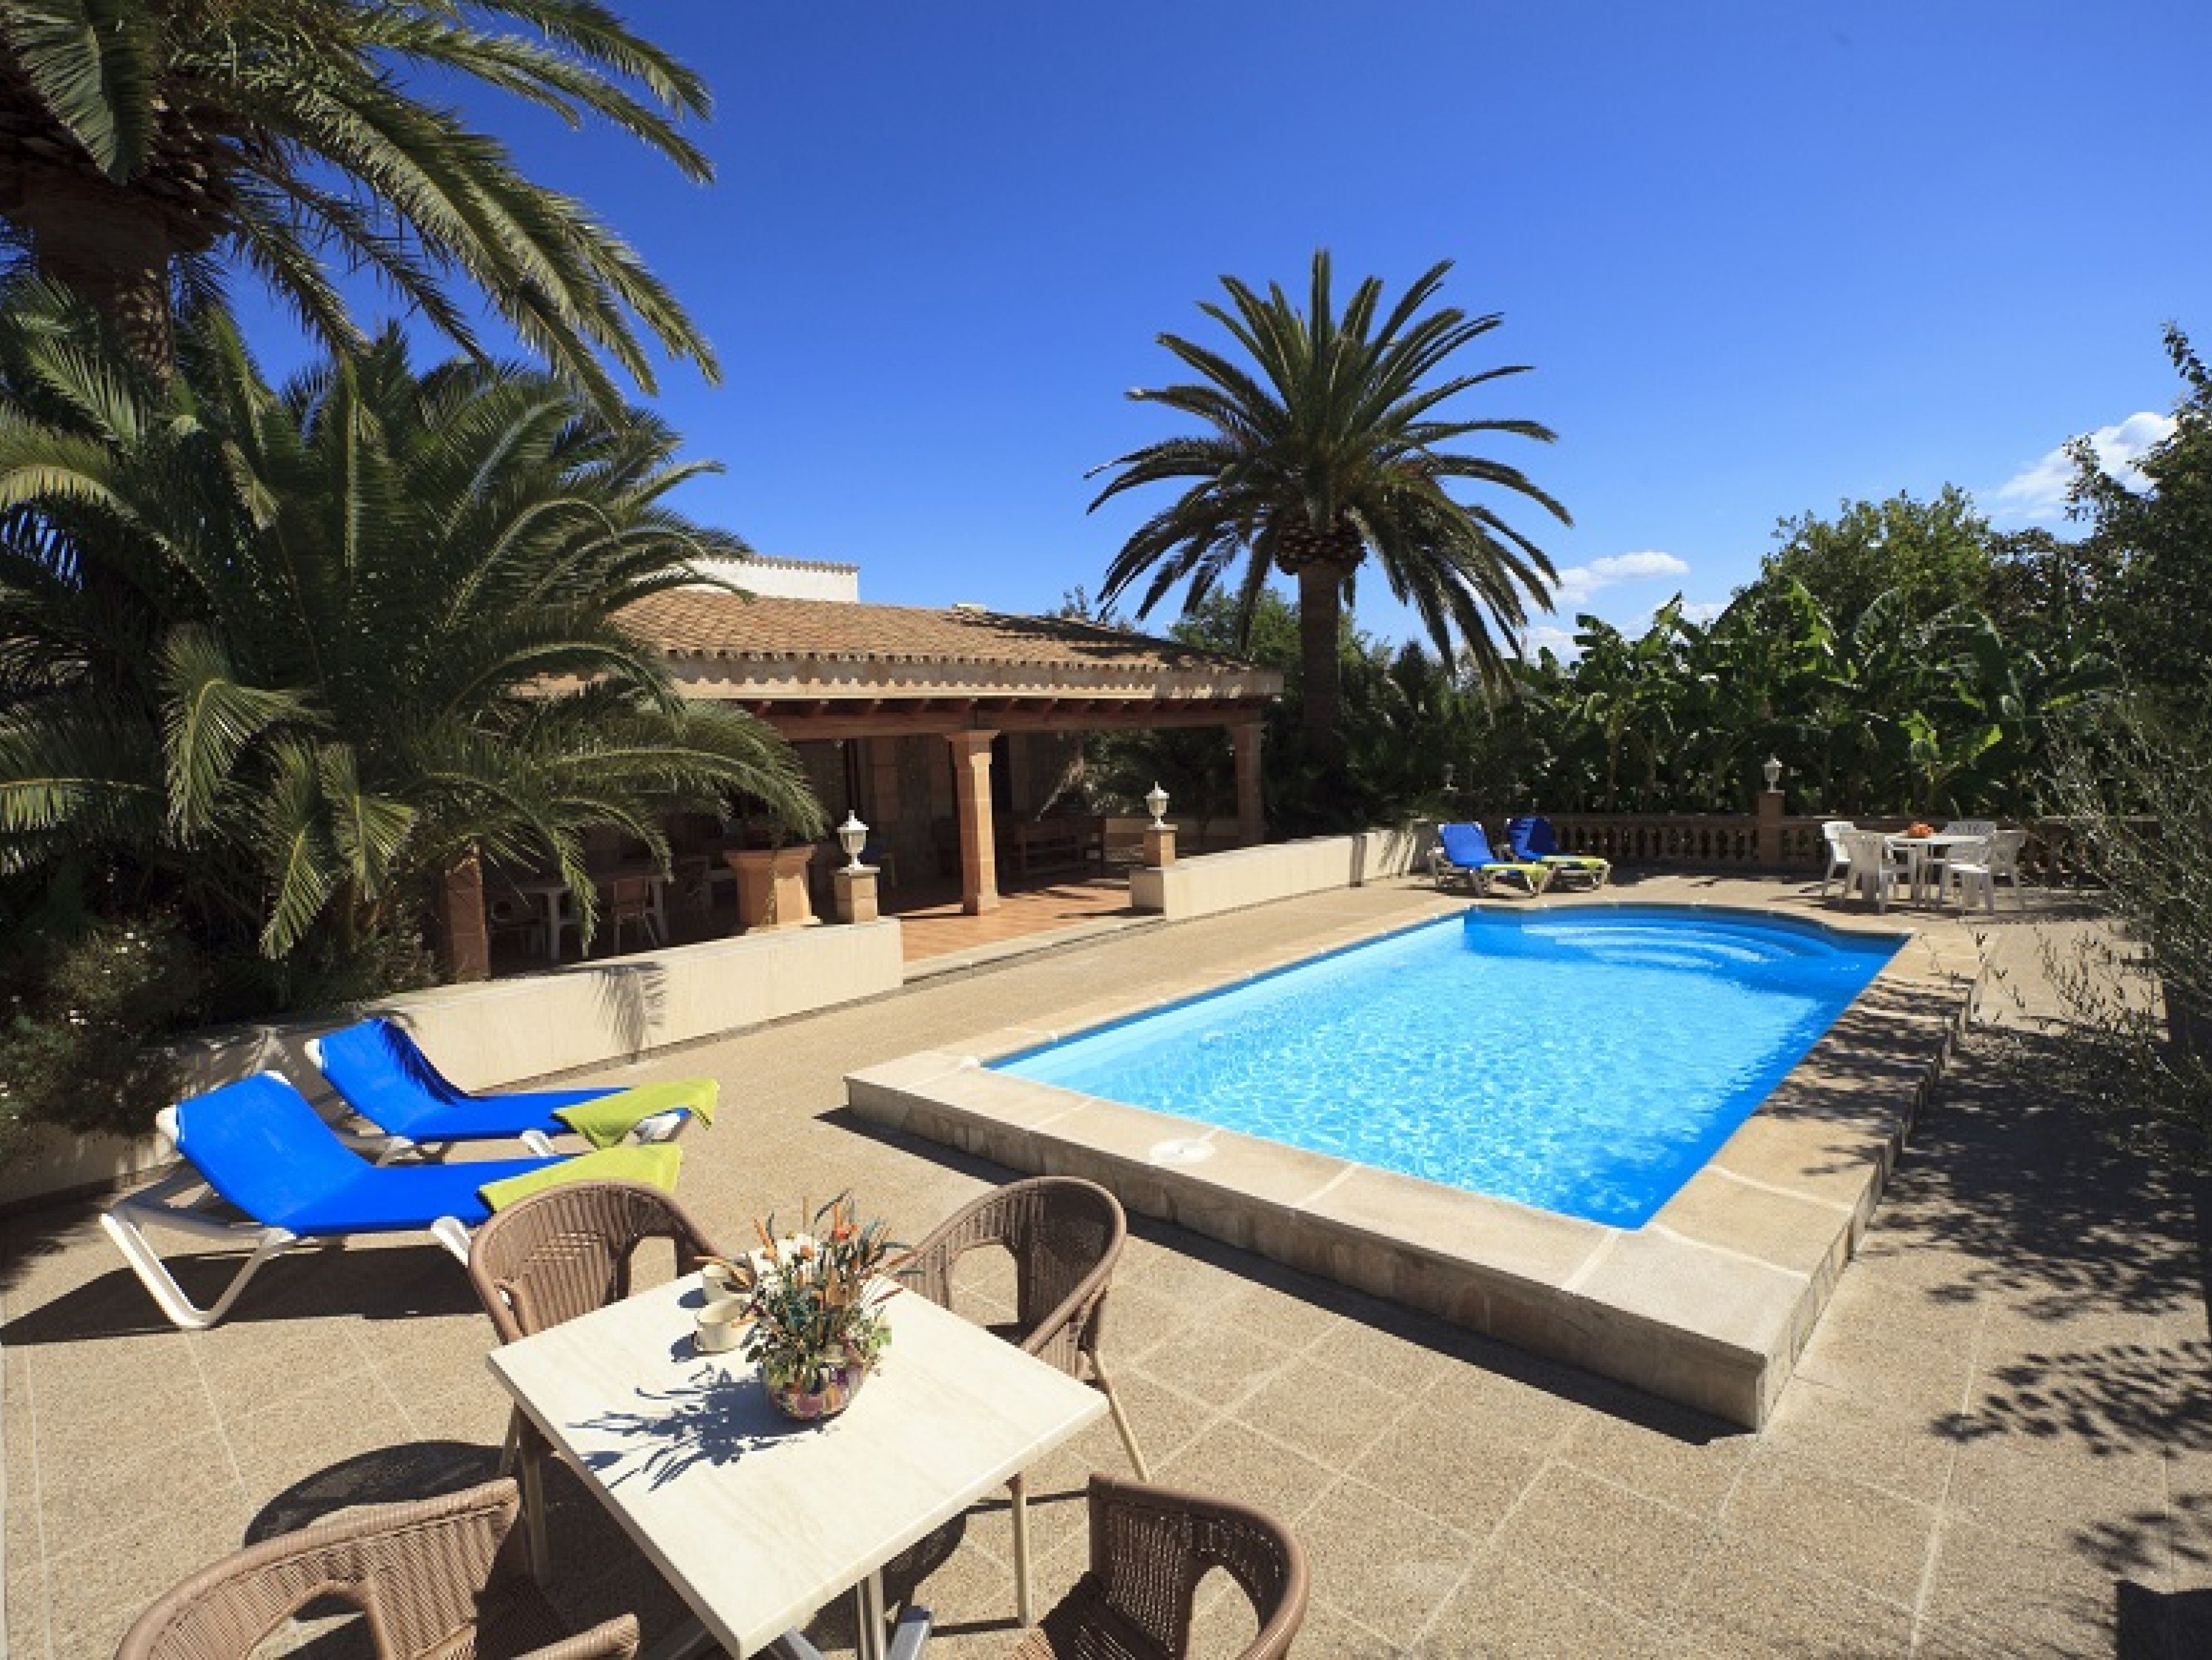 Faisan - vacation rentals in Mallorca near the beach